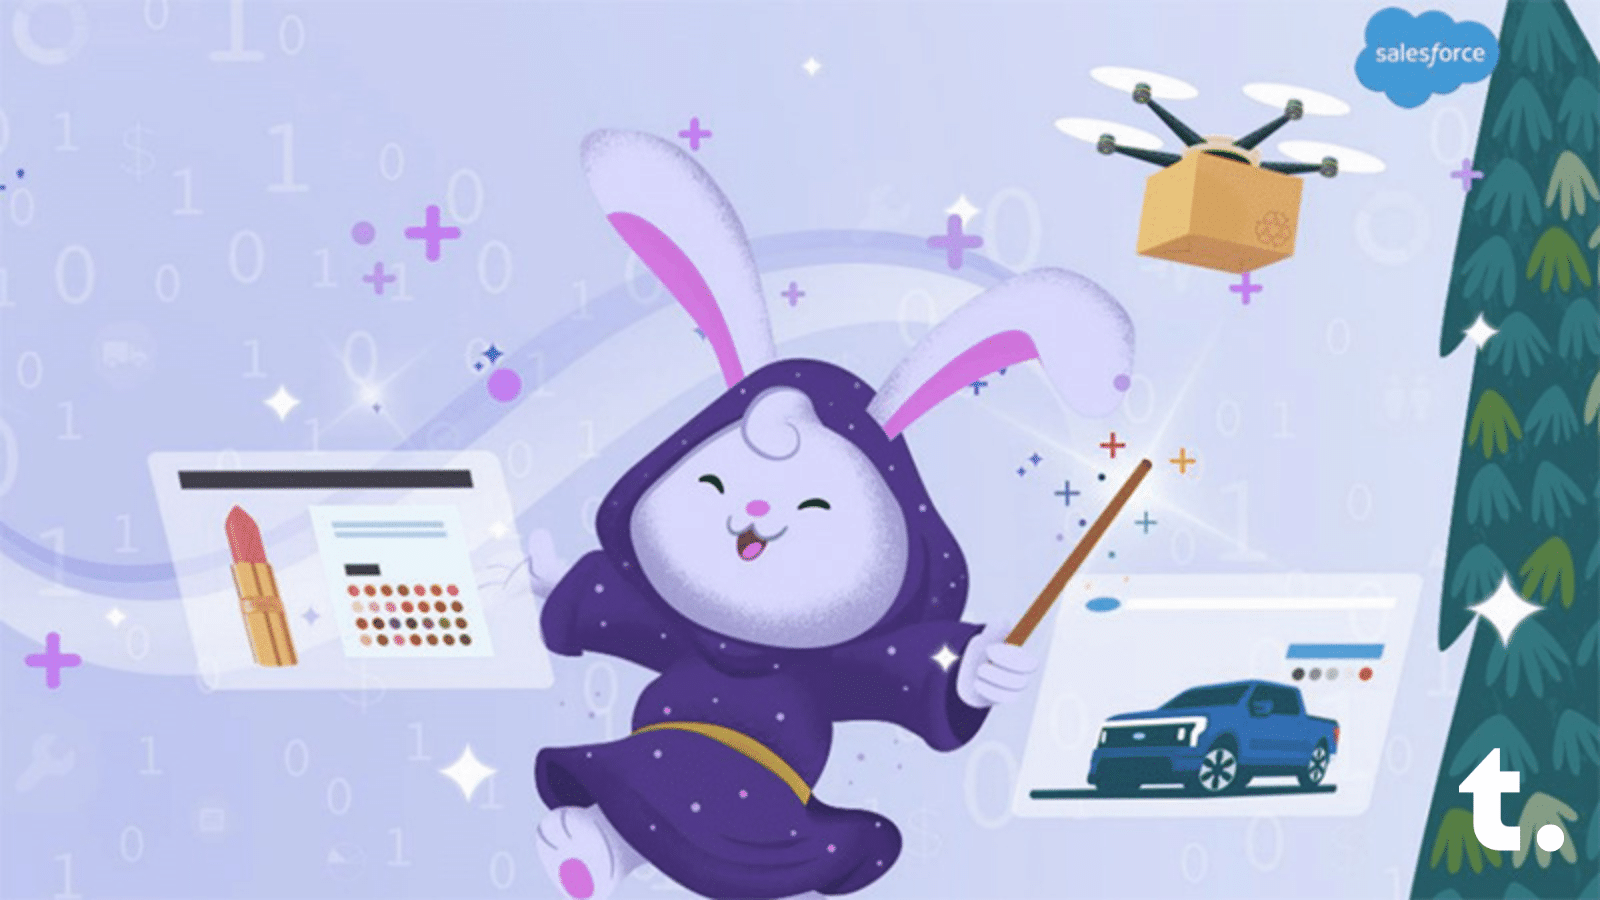 The Salesforce Genie bunny waving their magic wand